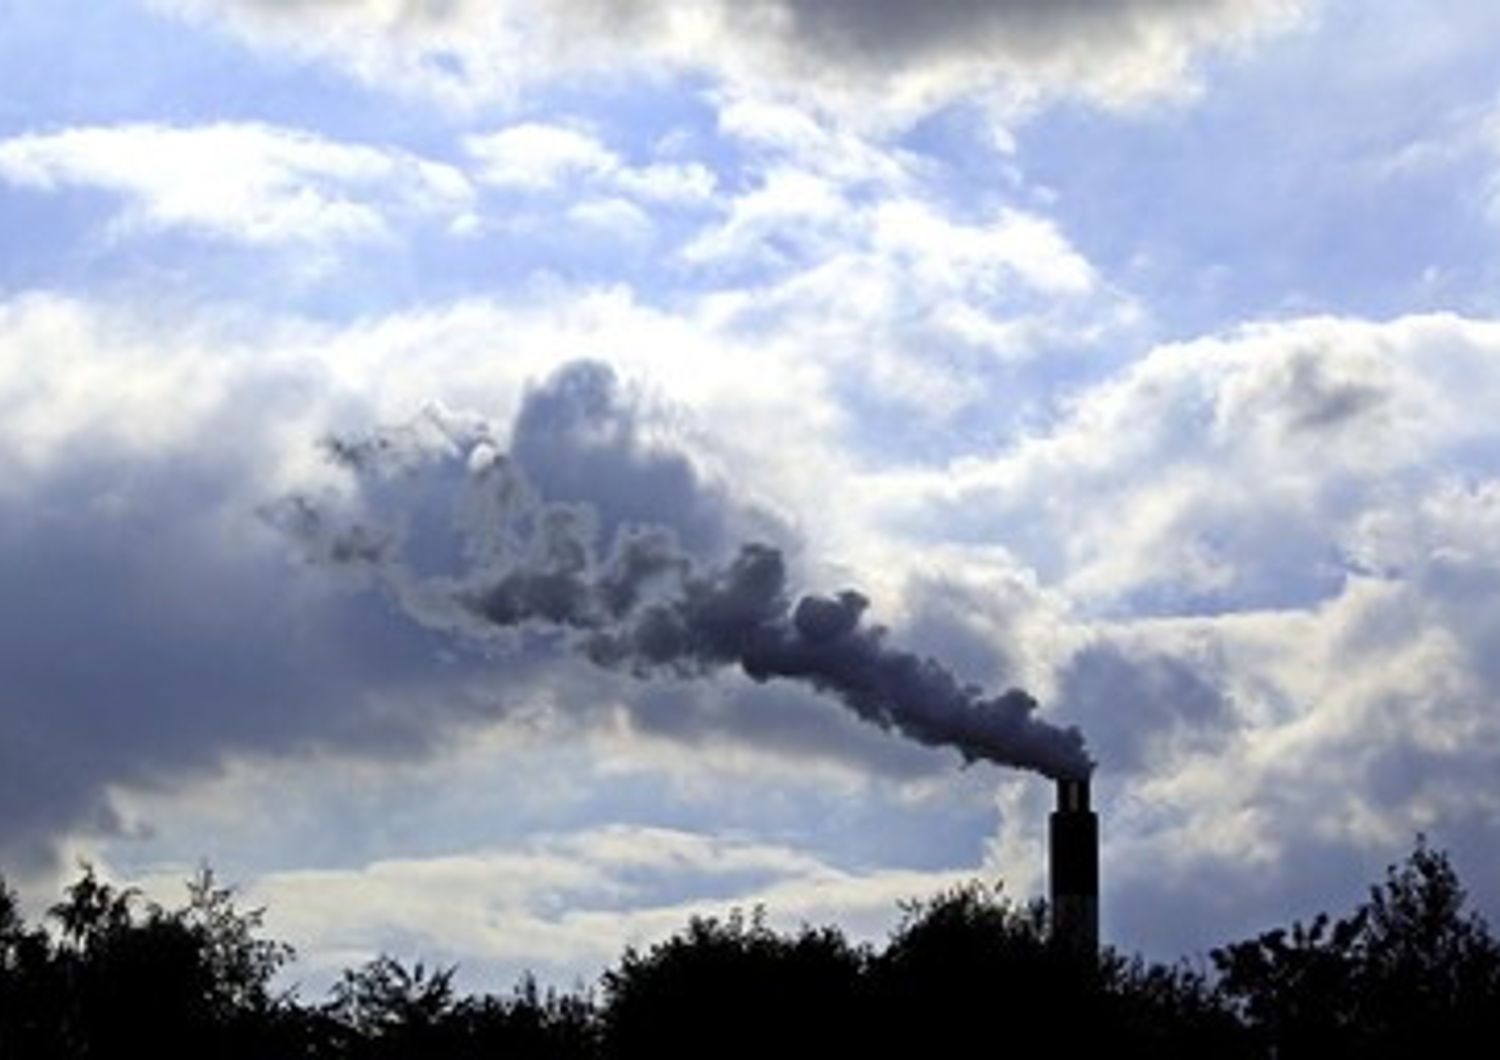 Industrie fumo smog ciminiere inquinamento gas serra